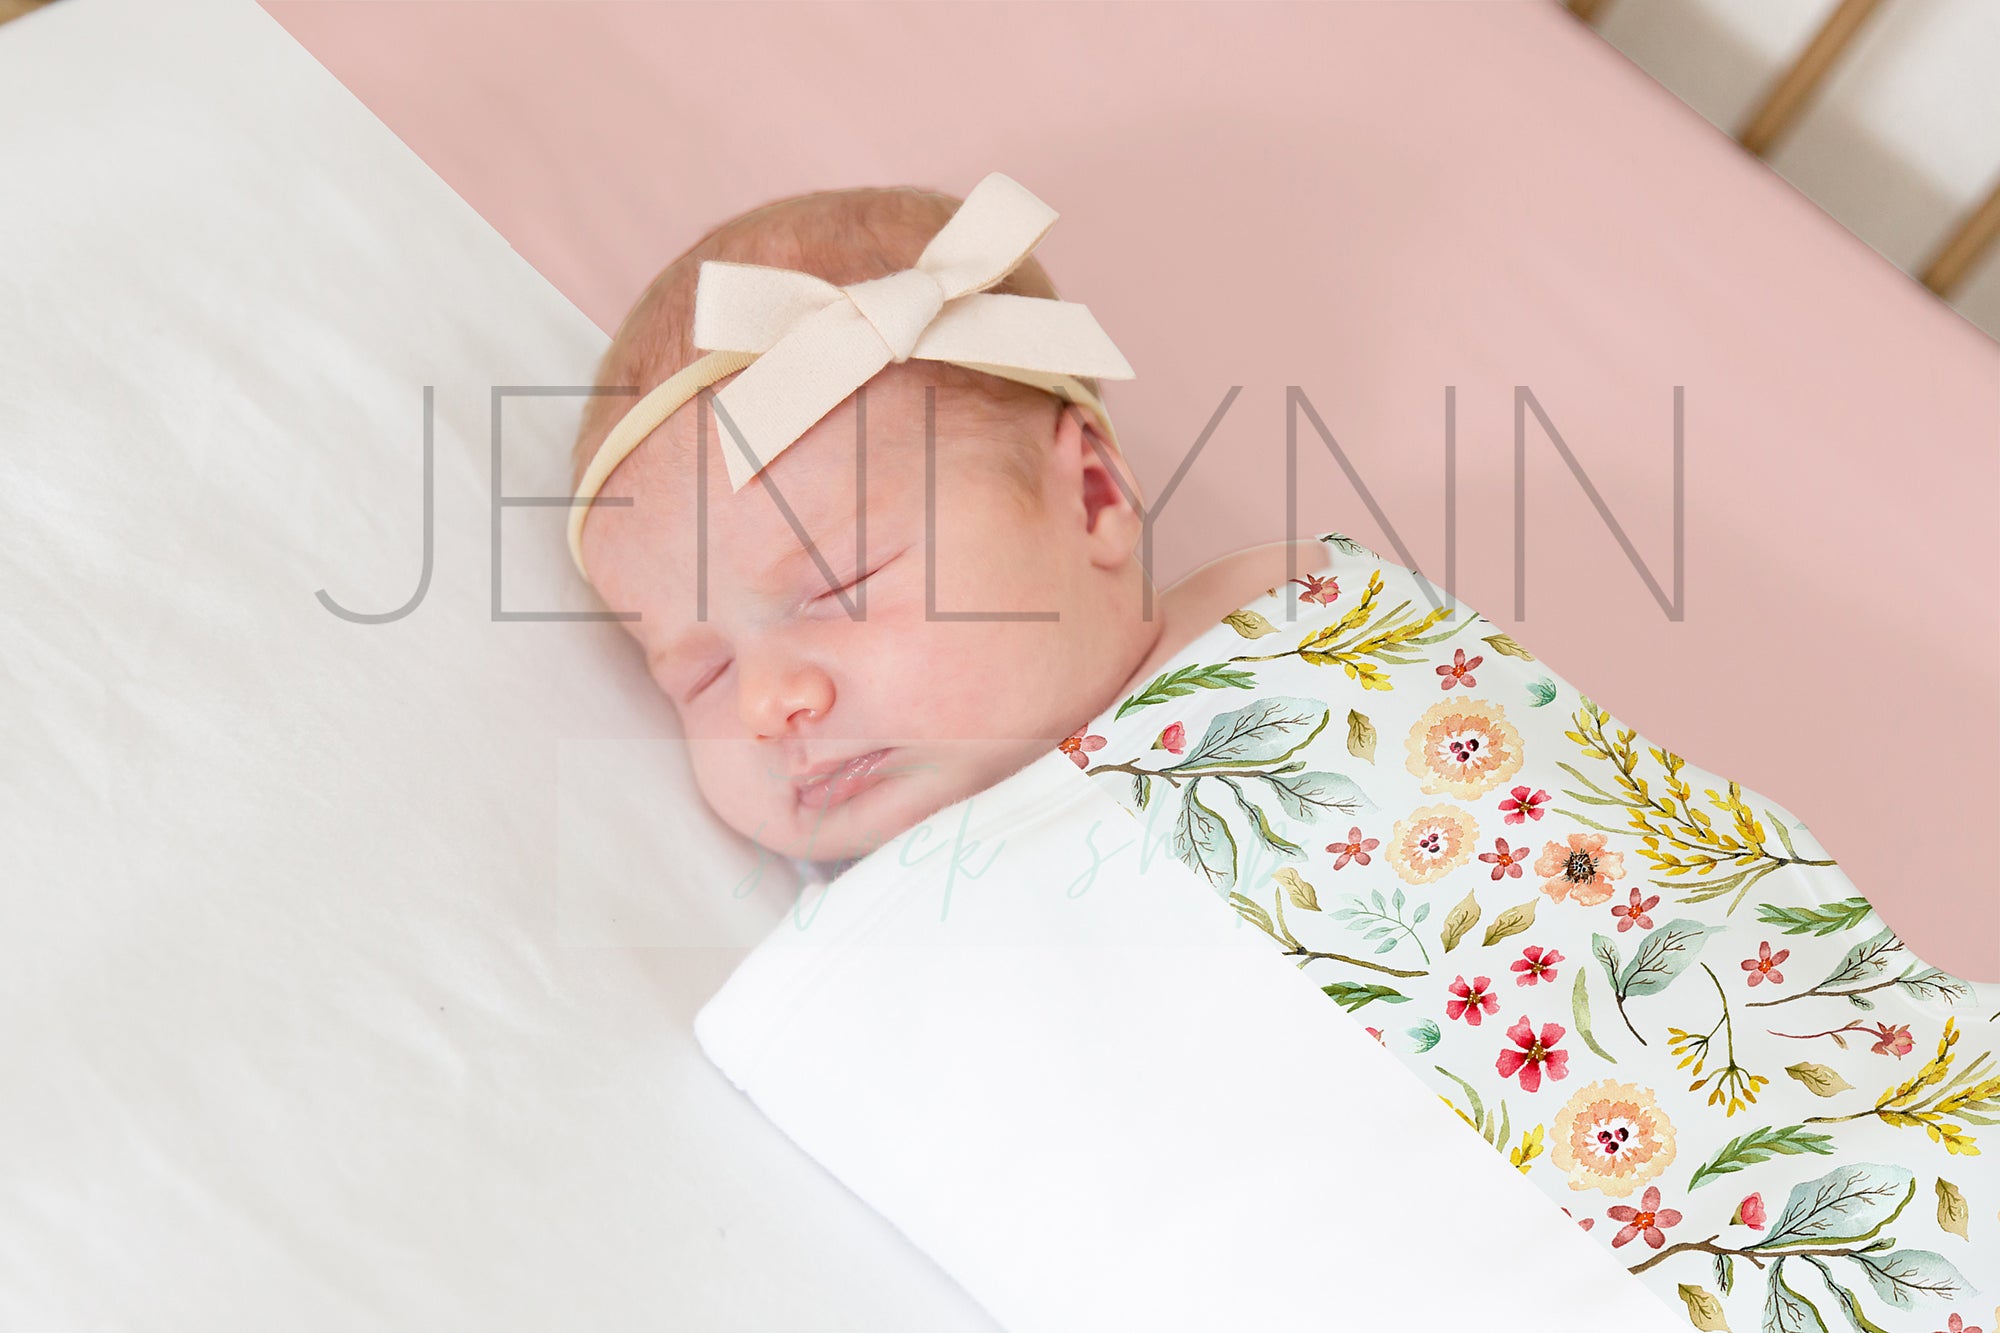 Download Jersey Baby Blanket Crib Sheet Bow Mockup 31 Psd Jenlynn Stock Shop